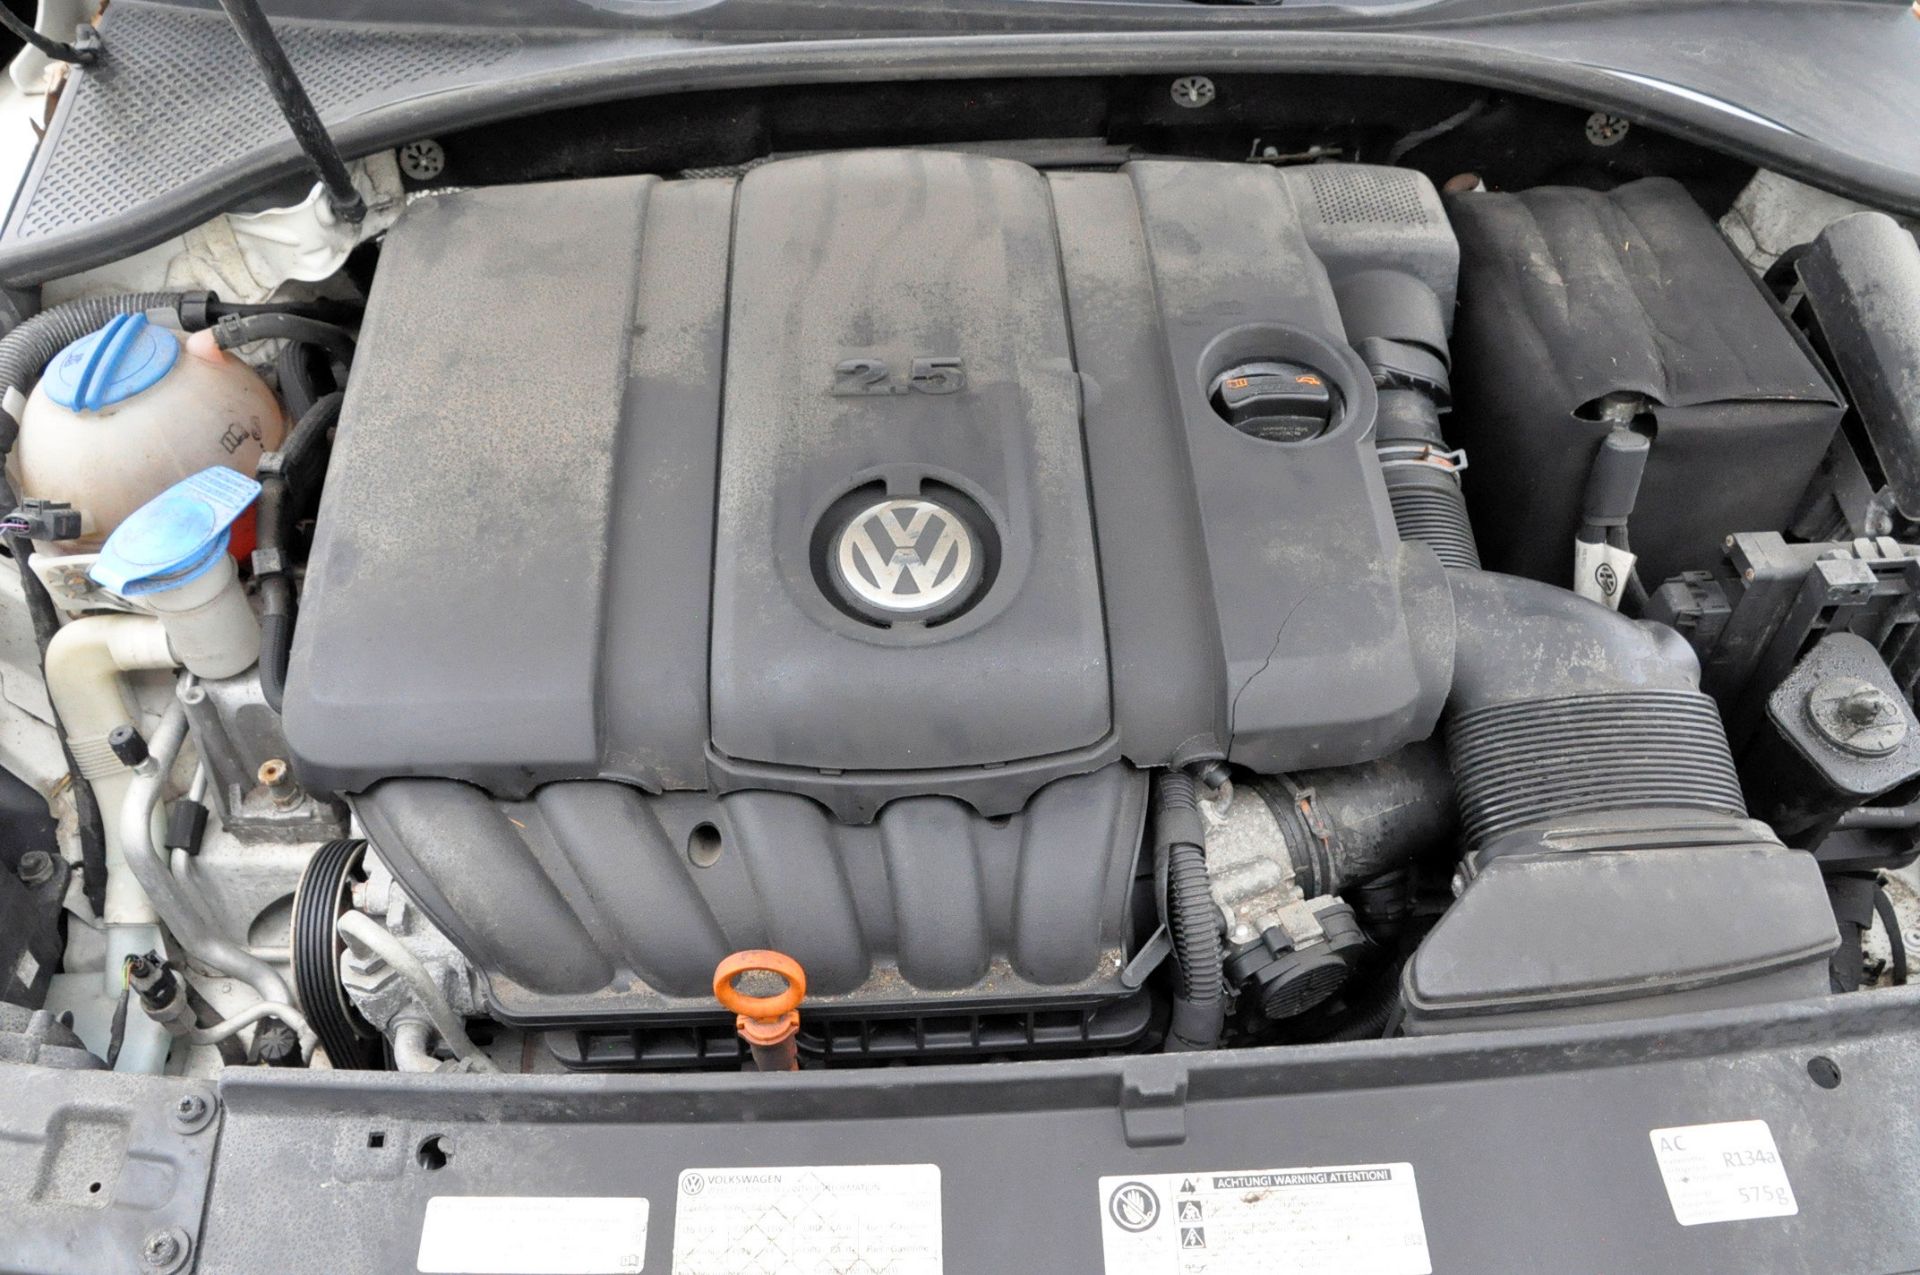 2013 Volkswagen Passat 4-Door Sedan, VIN 1VWBP7A3XDC115440, 2.5 Gas Engine, Auto Transmission, 242, - Image 5 of 10